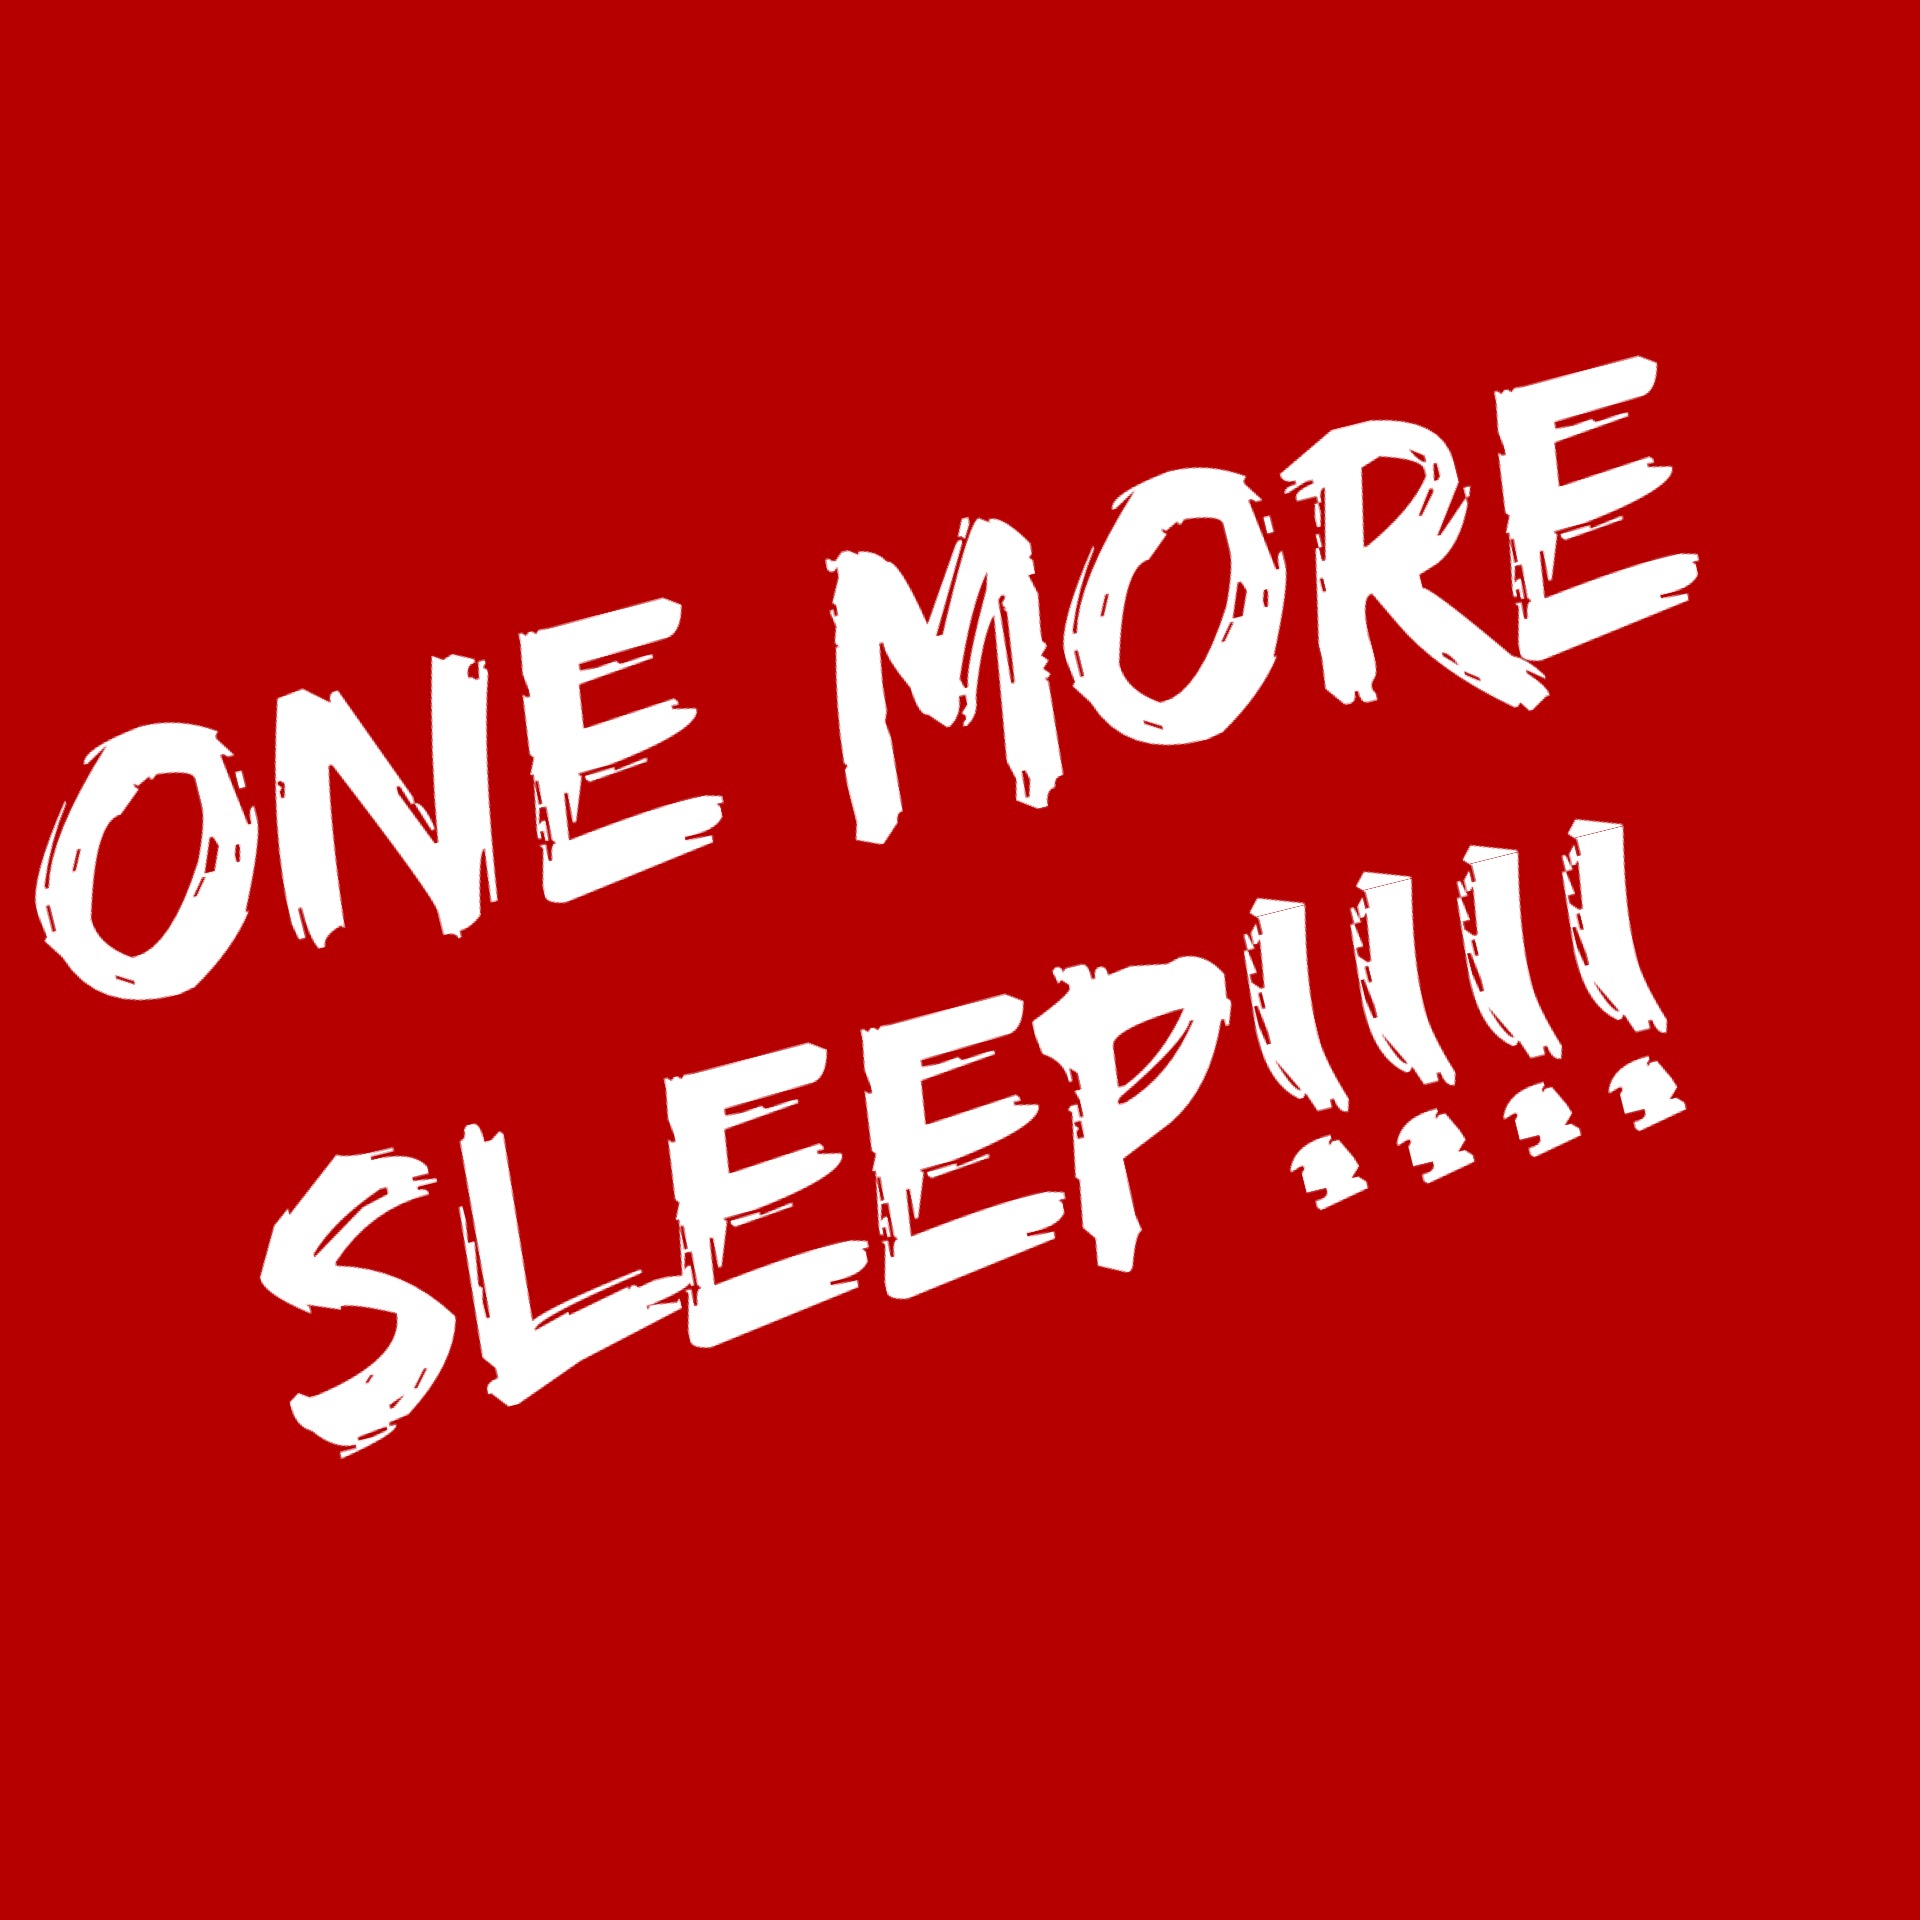 ONE MORE SLEEP…